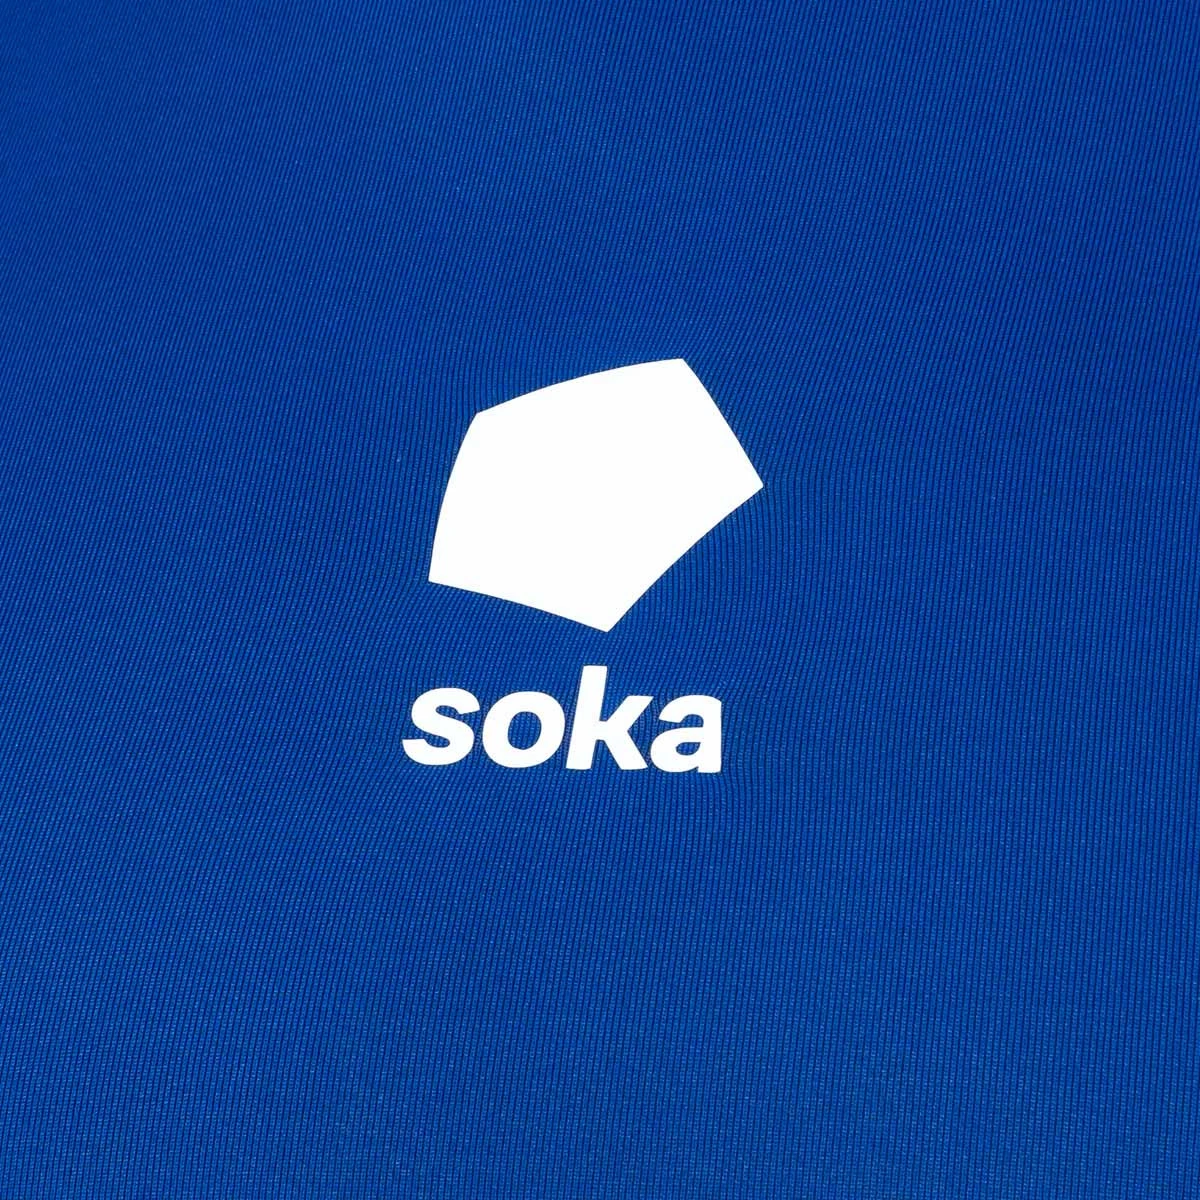 Jersey Soka First Layer Soul m/l Sea Blue - Fútbol Emotion